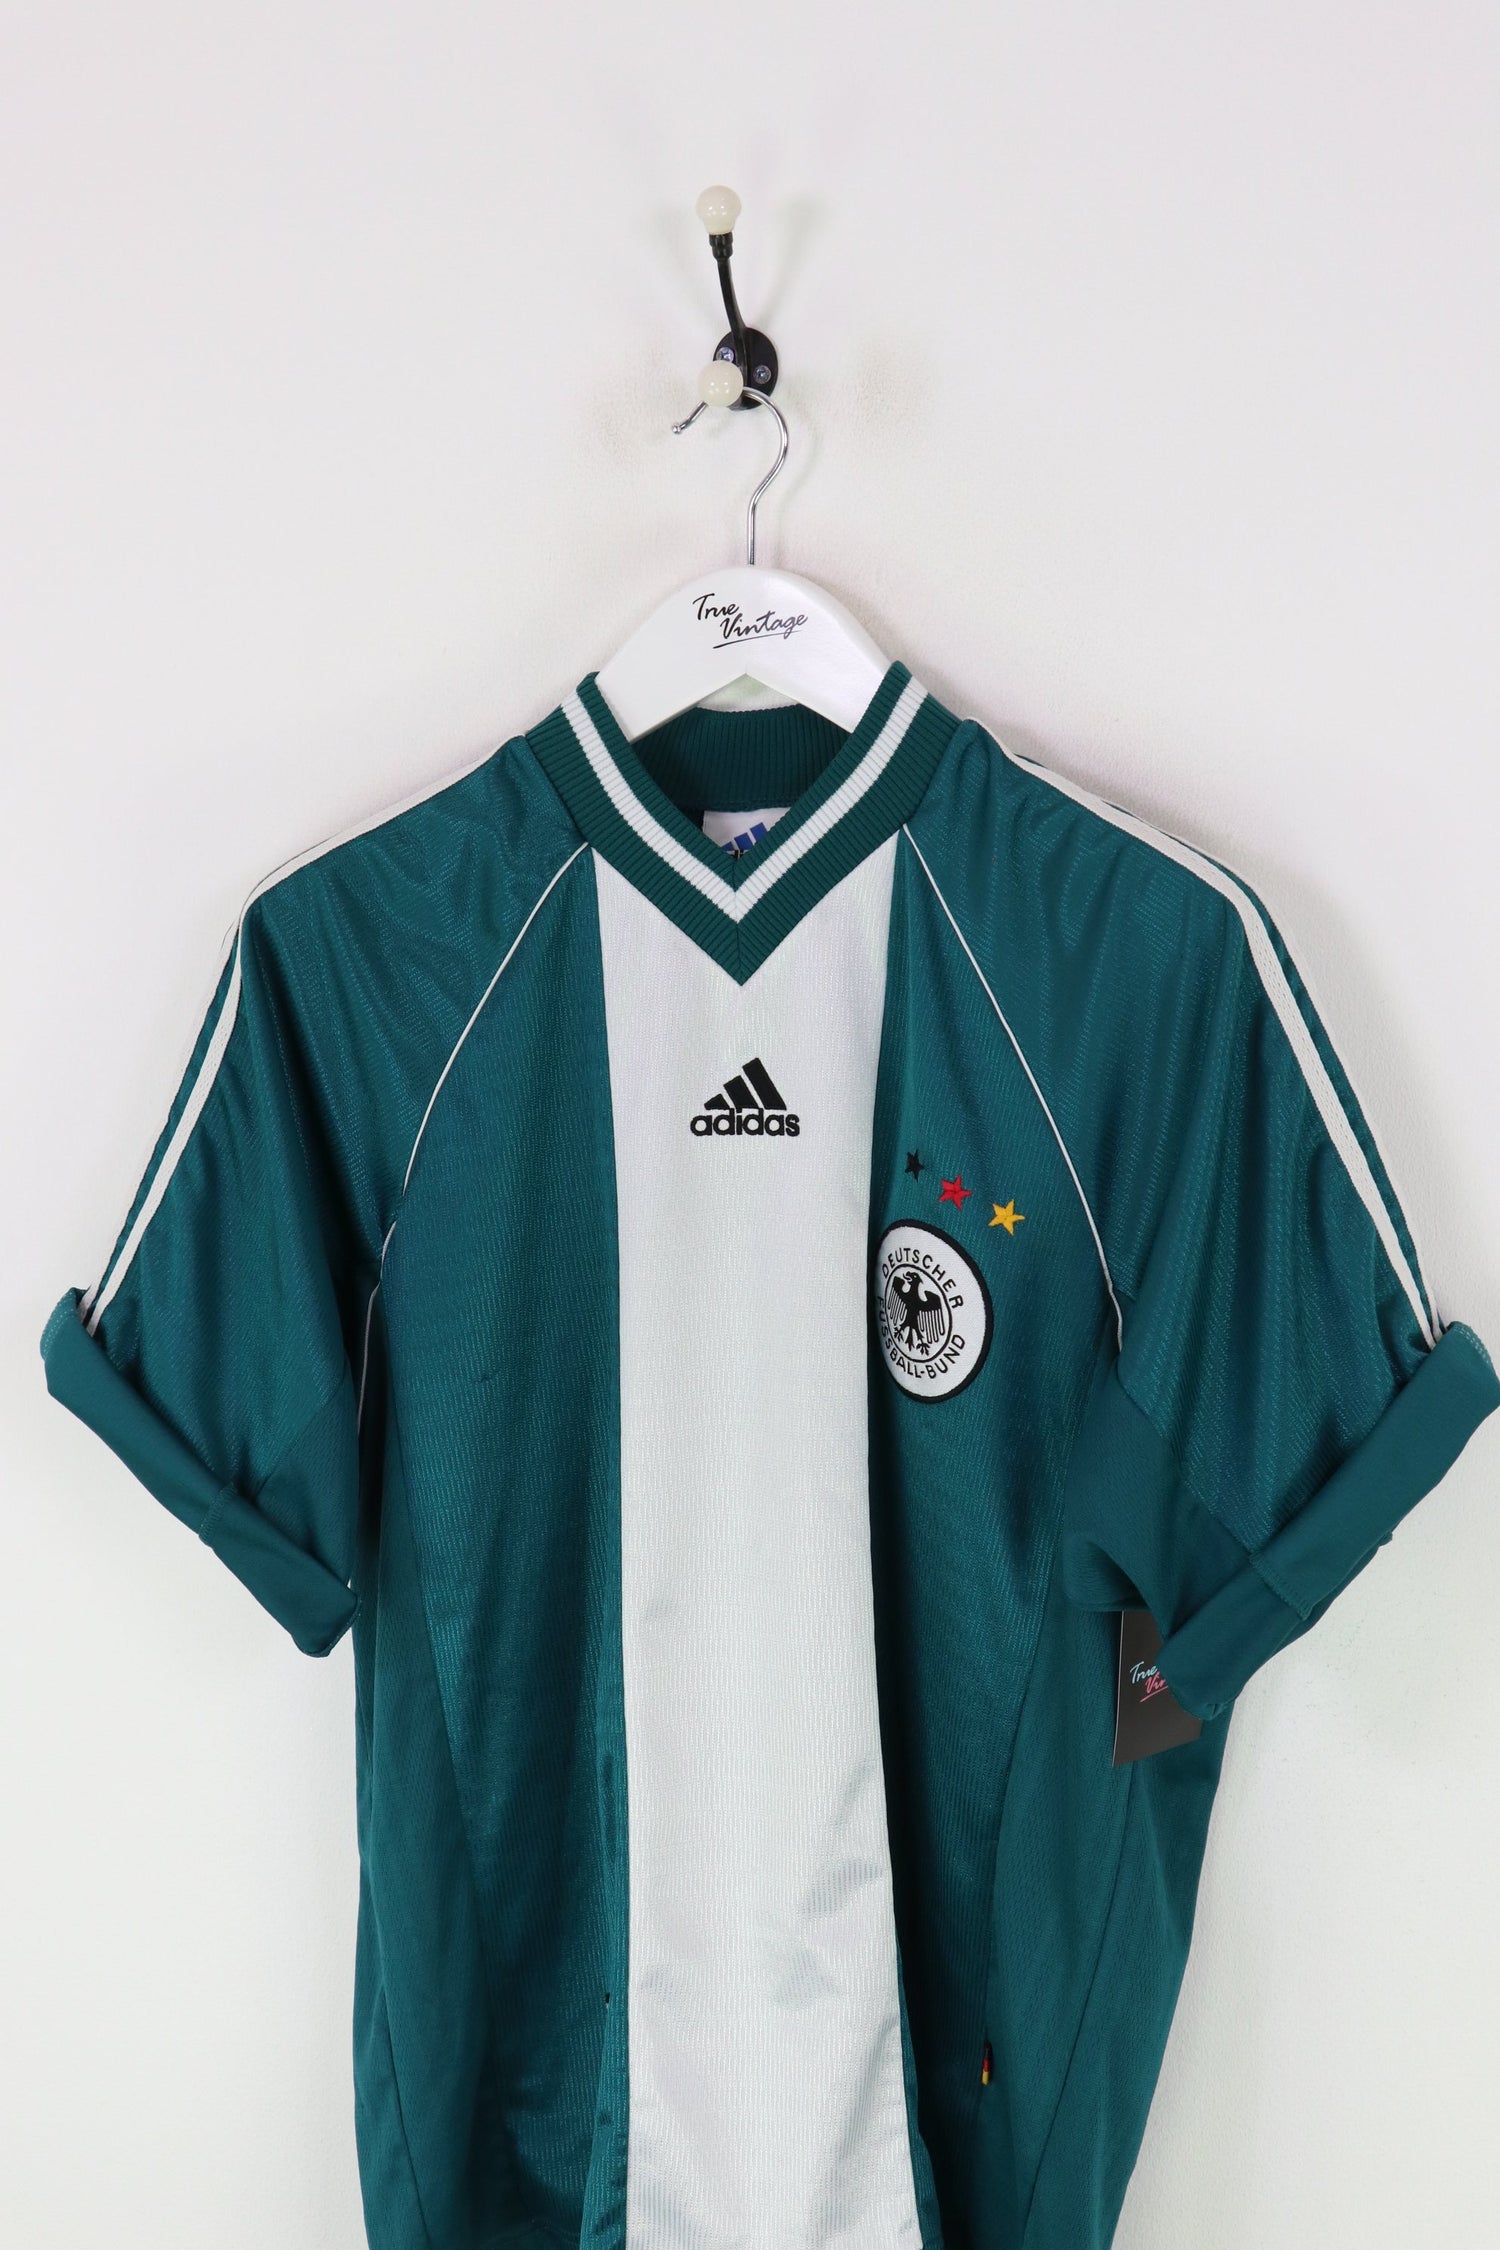 Adidas Germany Football Shirt Green/White Large